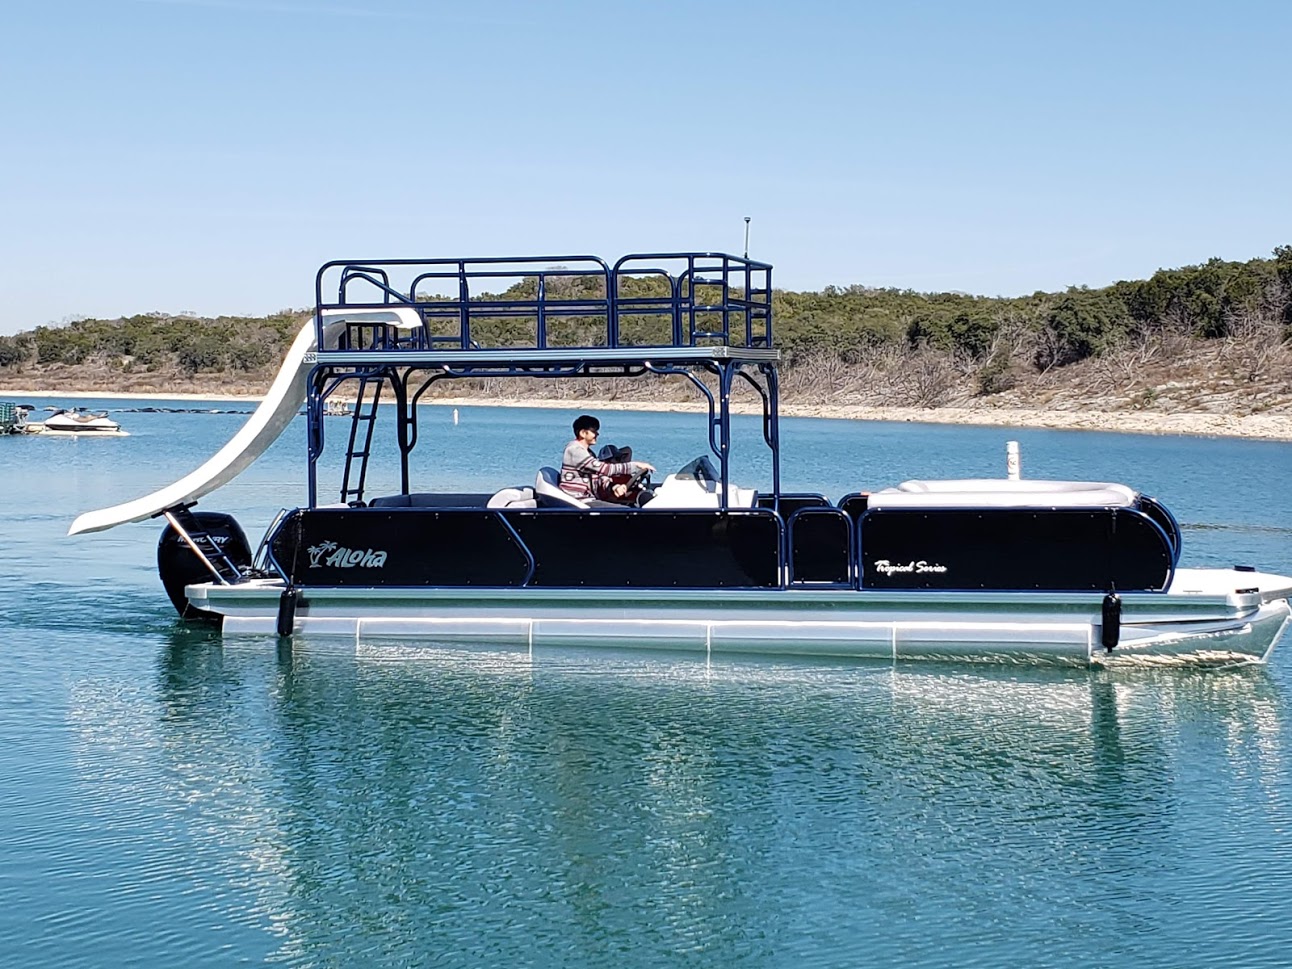 Double Decker pontoon boat rental at Suntex on Canyon Lake